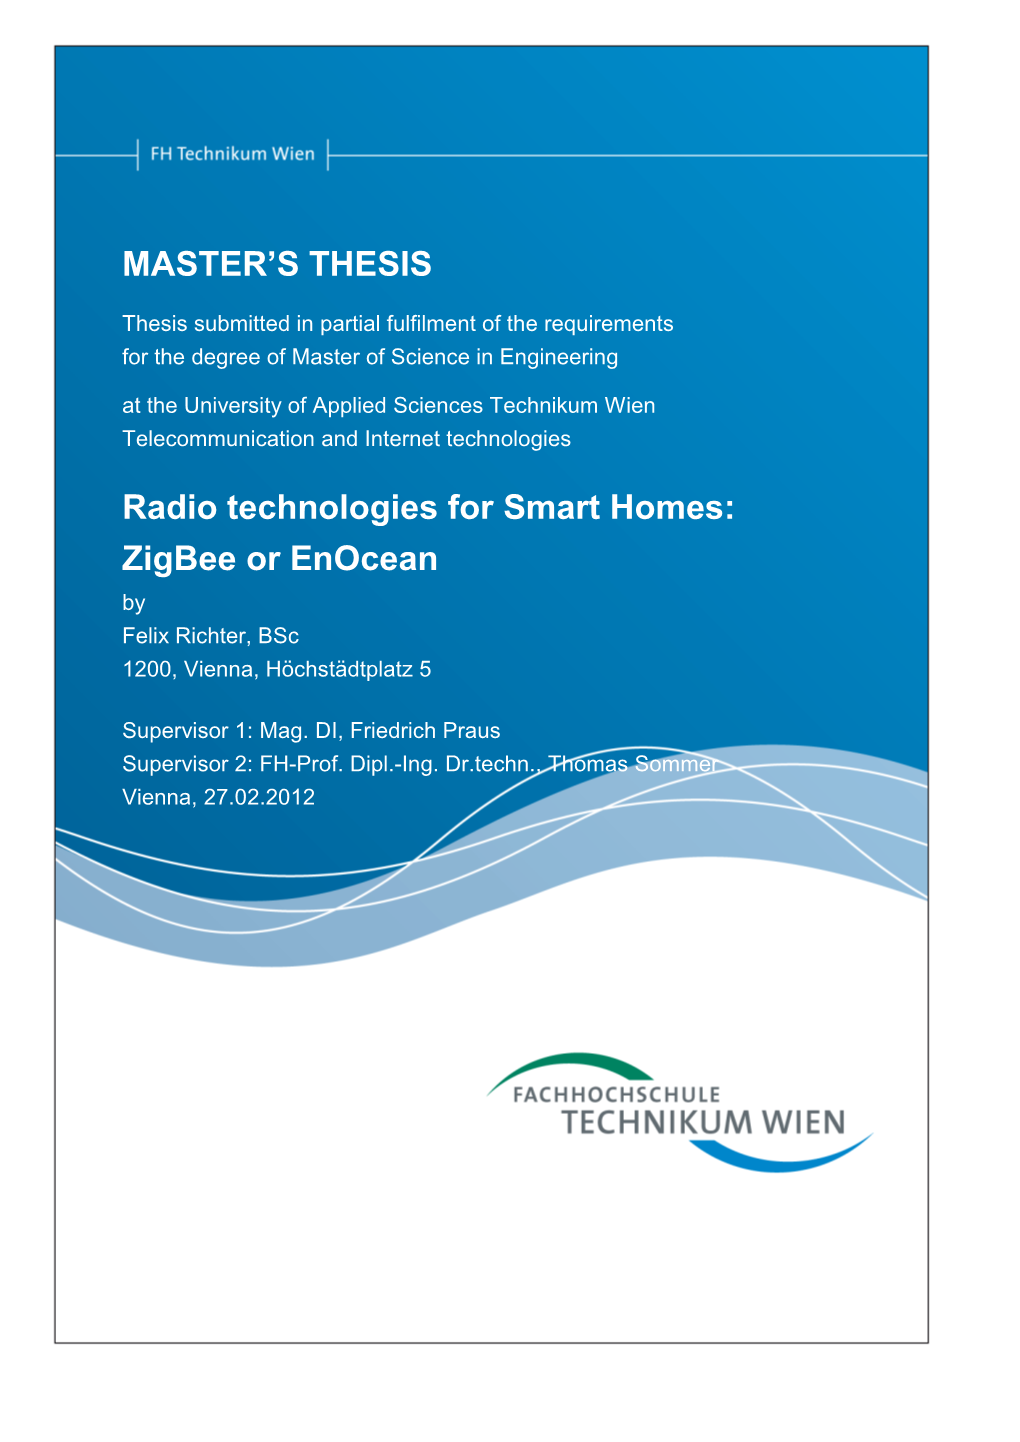 MASTER's THESIS Radio Technologies for Smart Homes: Zigbee Or Enocean